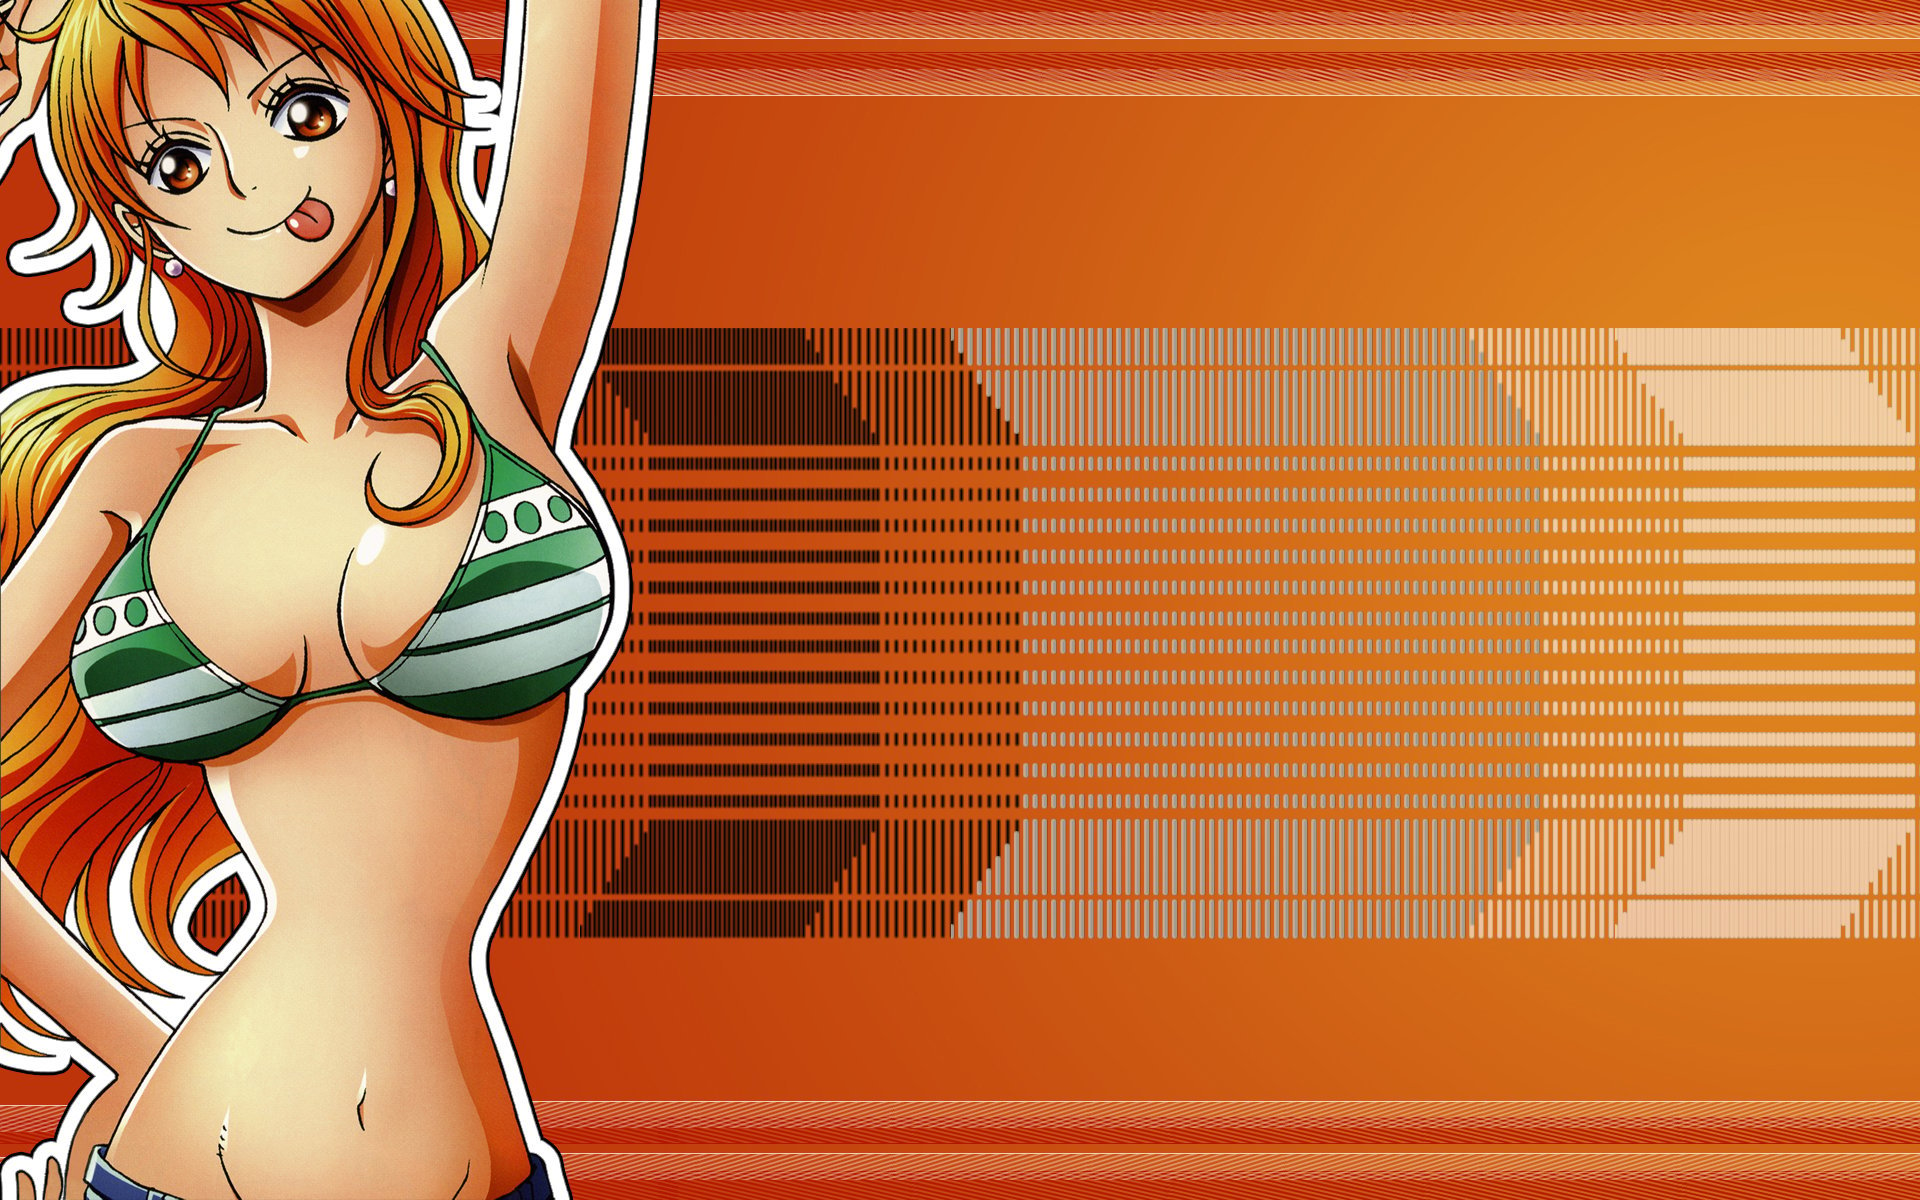 Nami One Piece wallpapers 1920x1200 desktop backgrounds 1920x1200